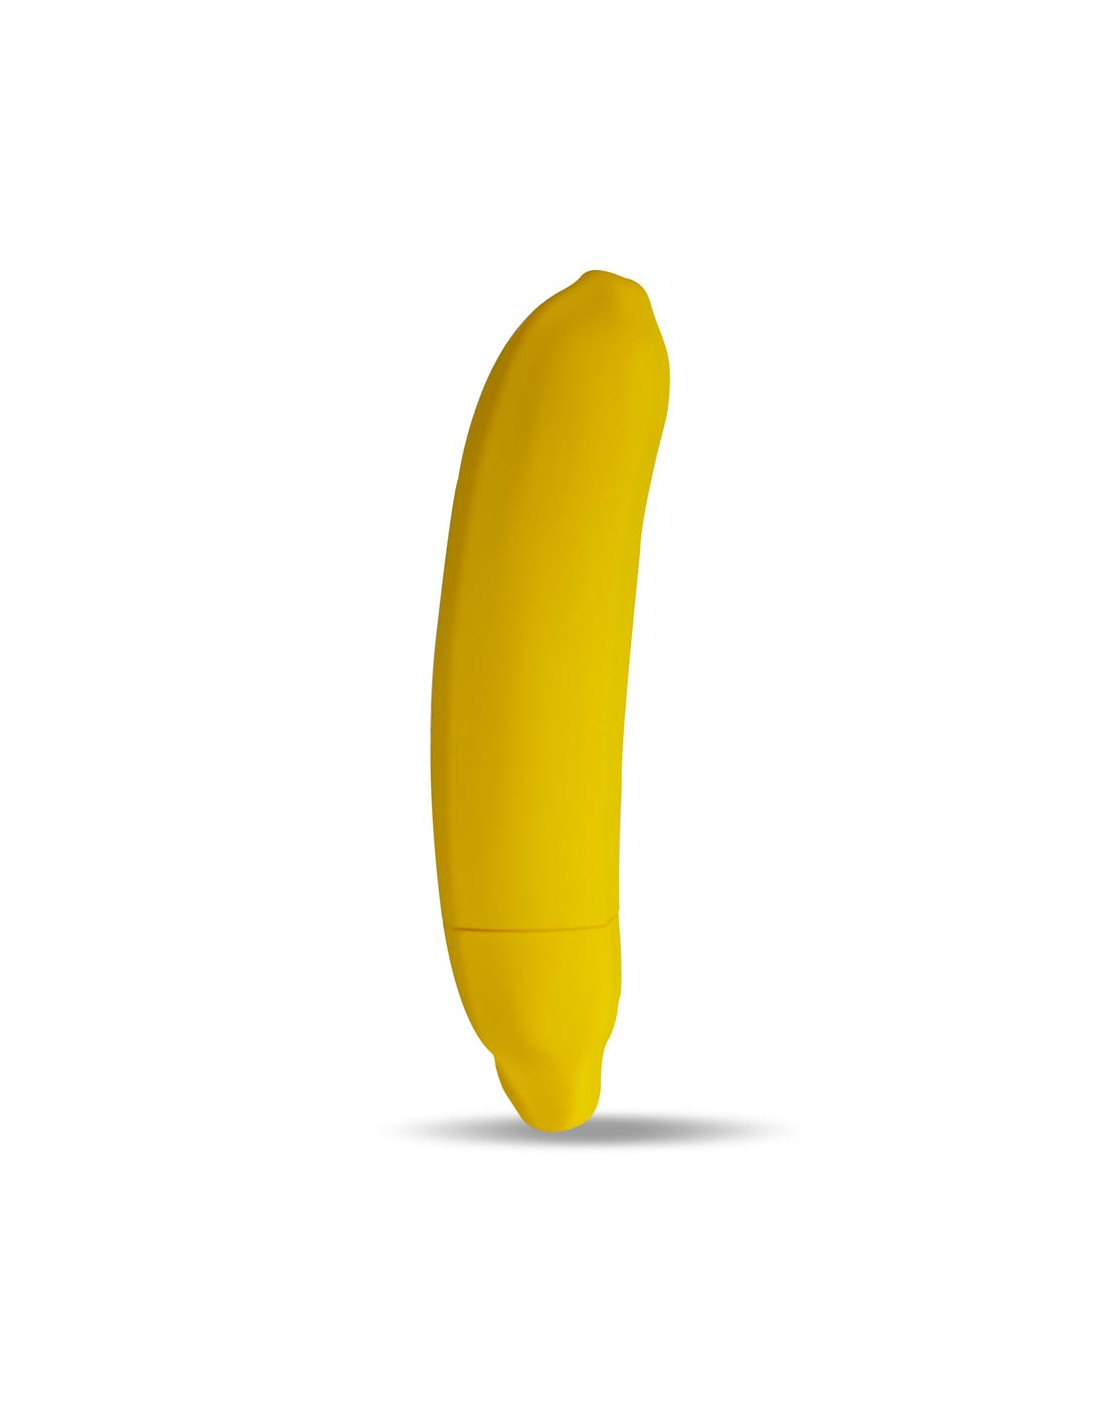 Vibro banane